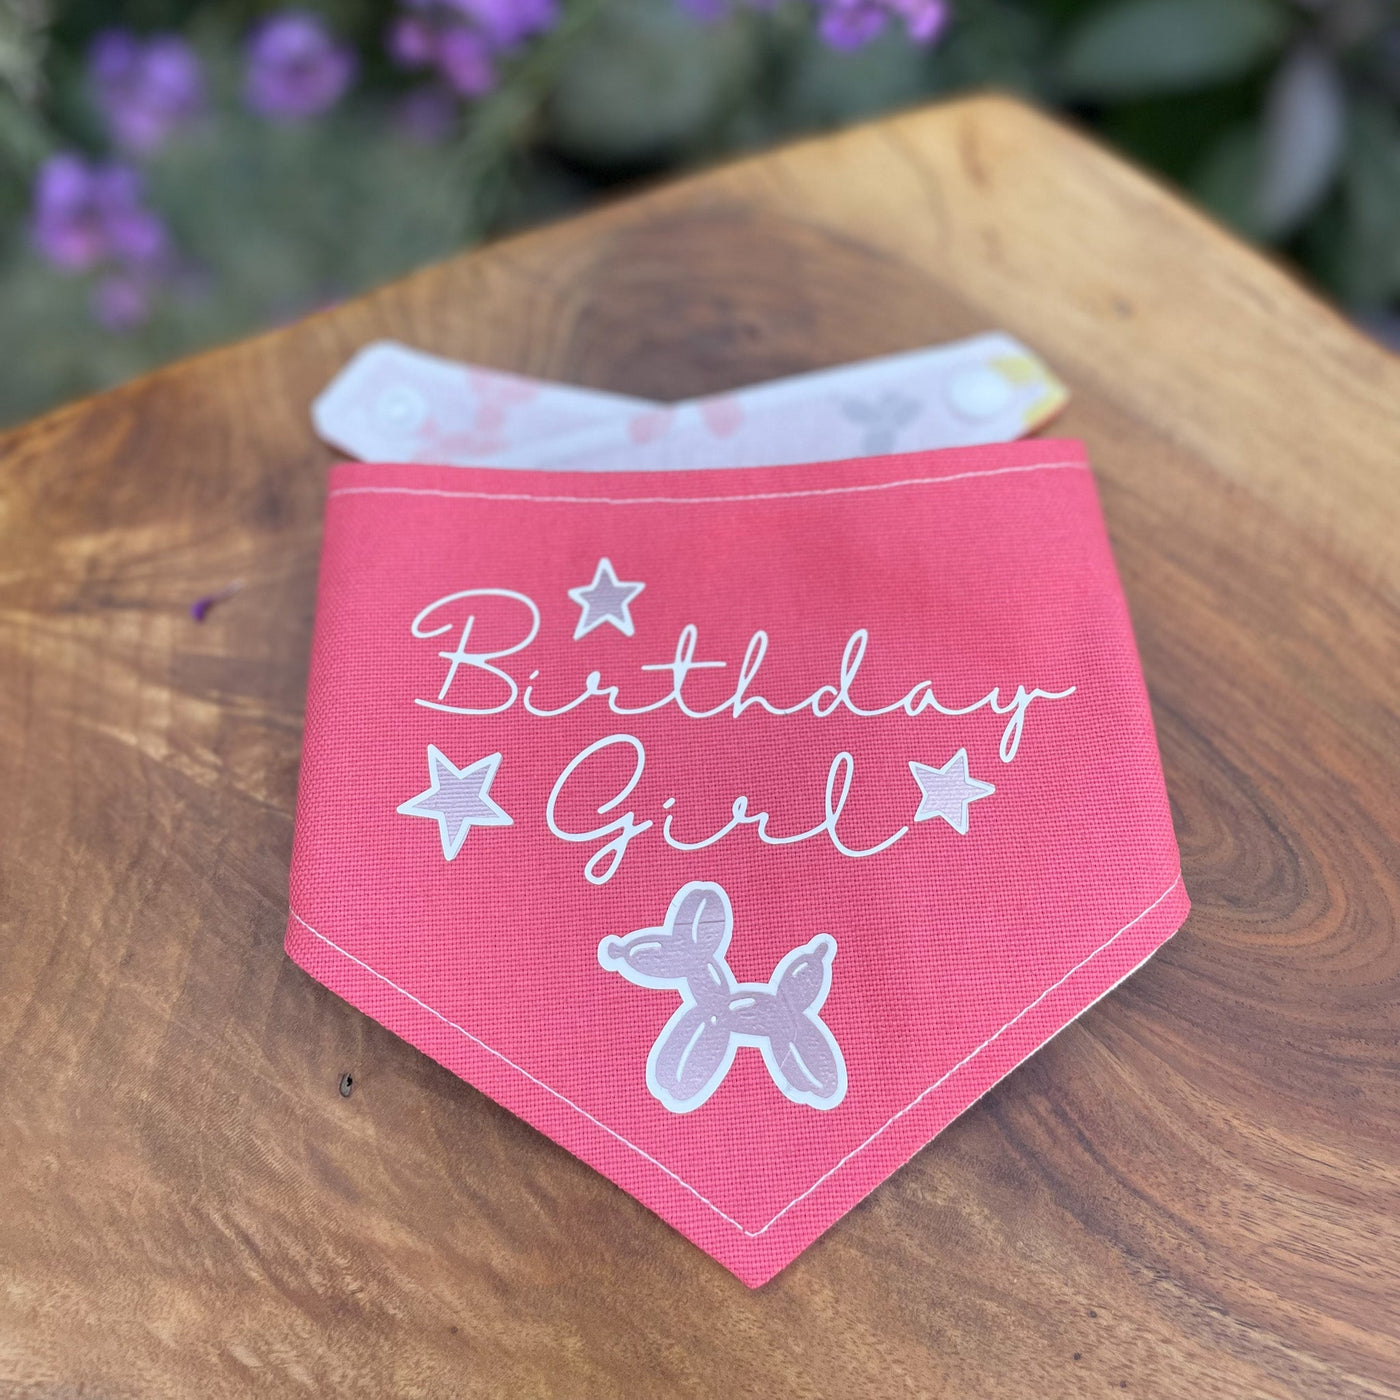 Bright pink "Birthday Girl" dog bandana